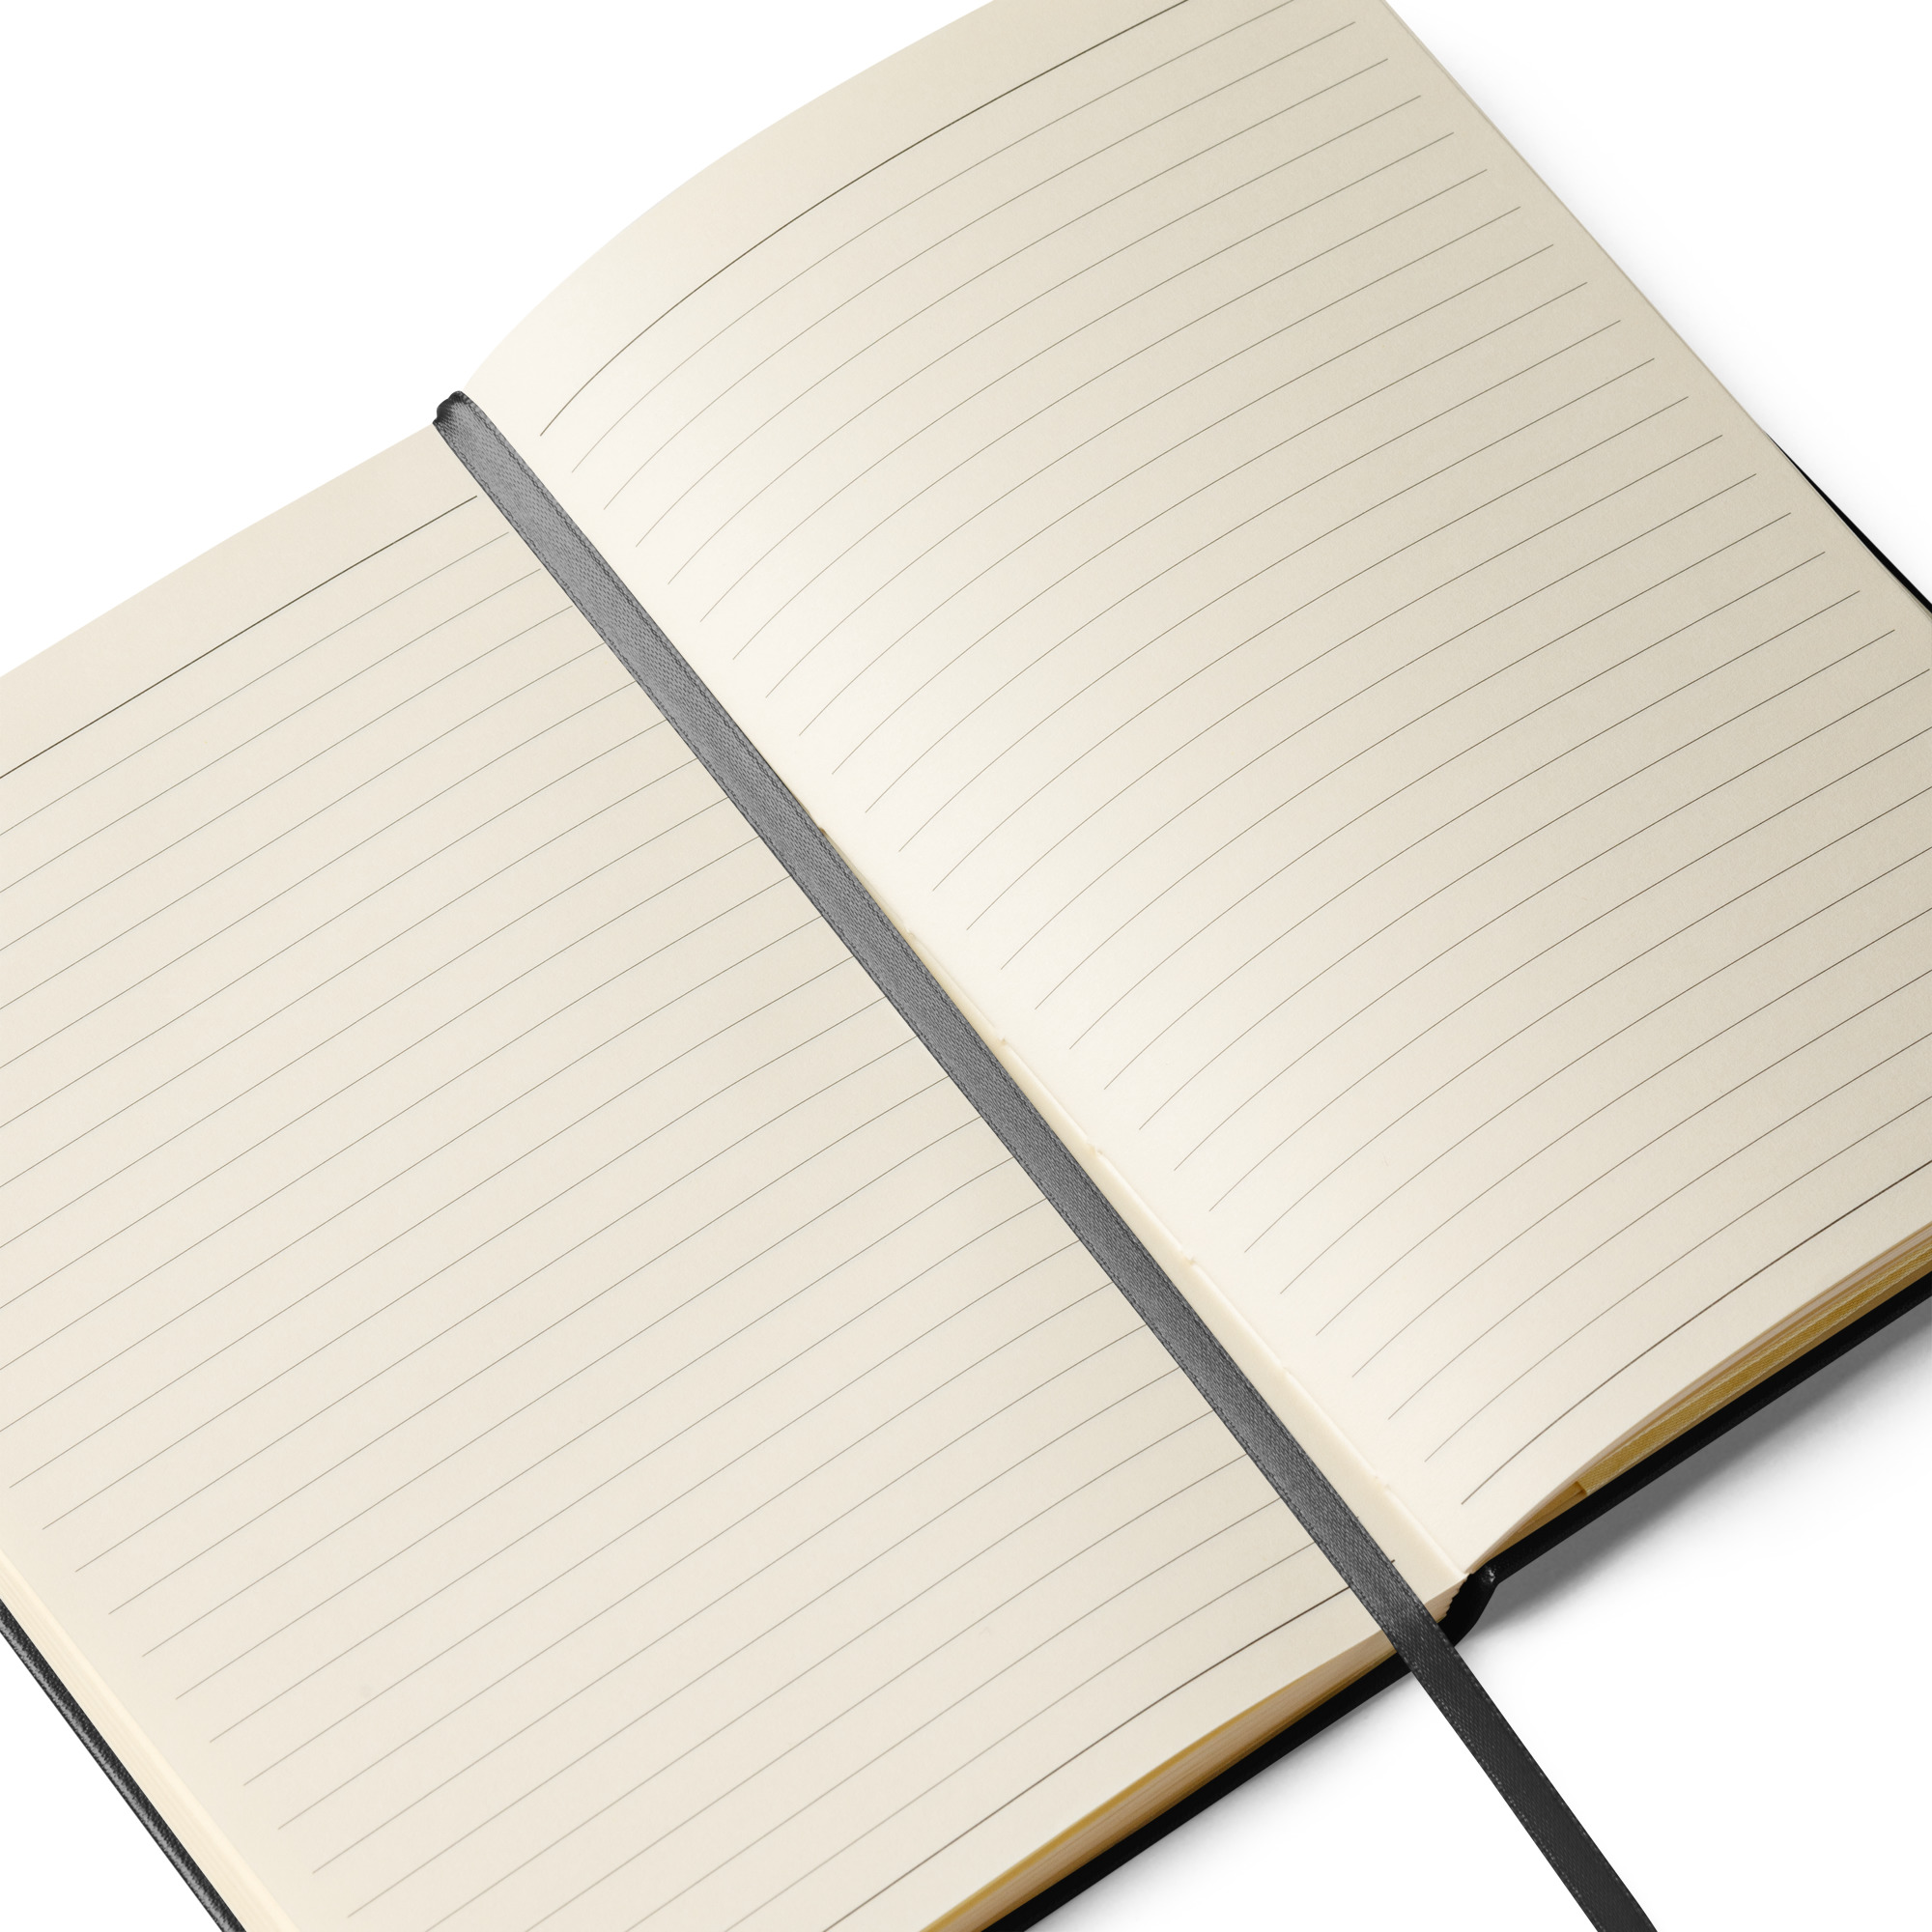 hardcover-bound-notebook-black-product-details-2-6537e454493c6.jpg